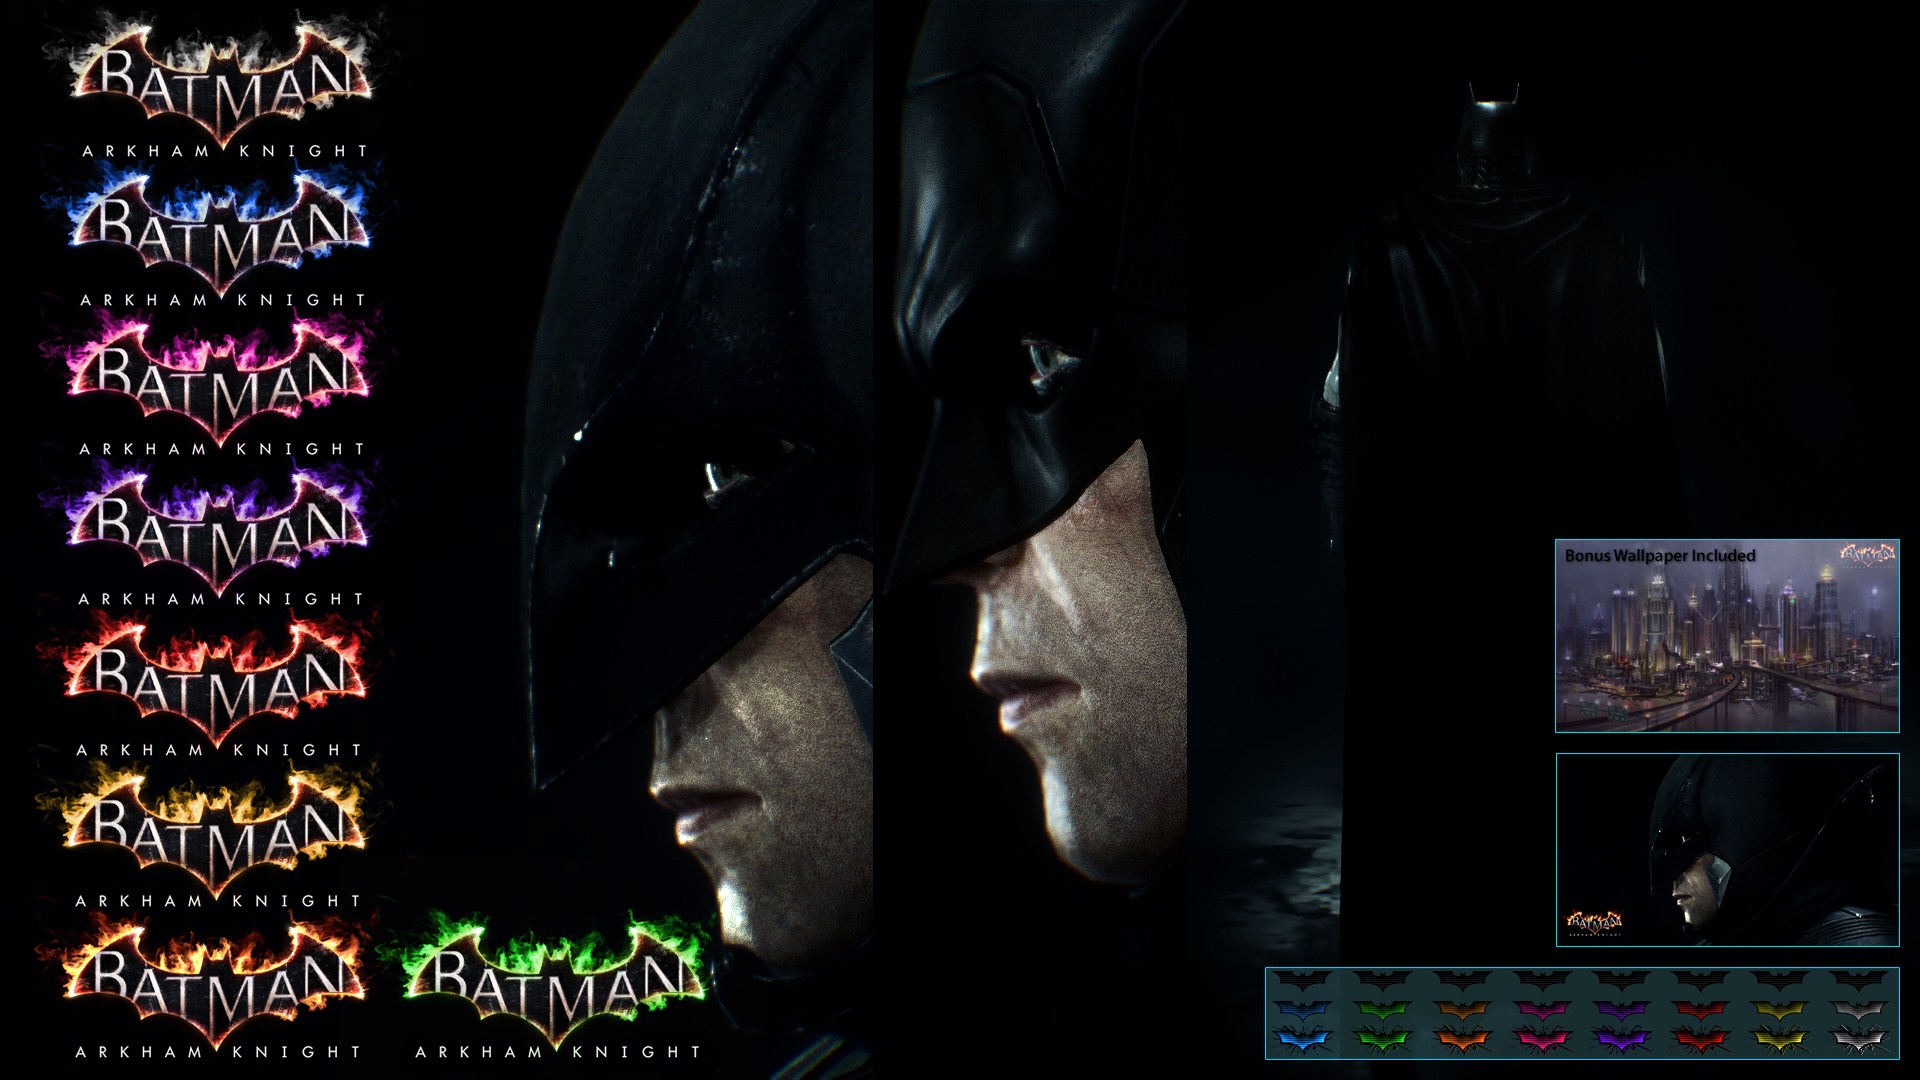 Batman Arkham Knight - Wallpaper/Start Orb Theme Pack | Windows 8 Help  Forums